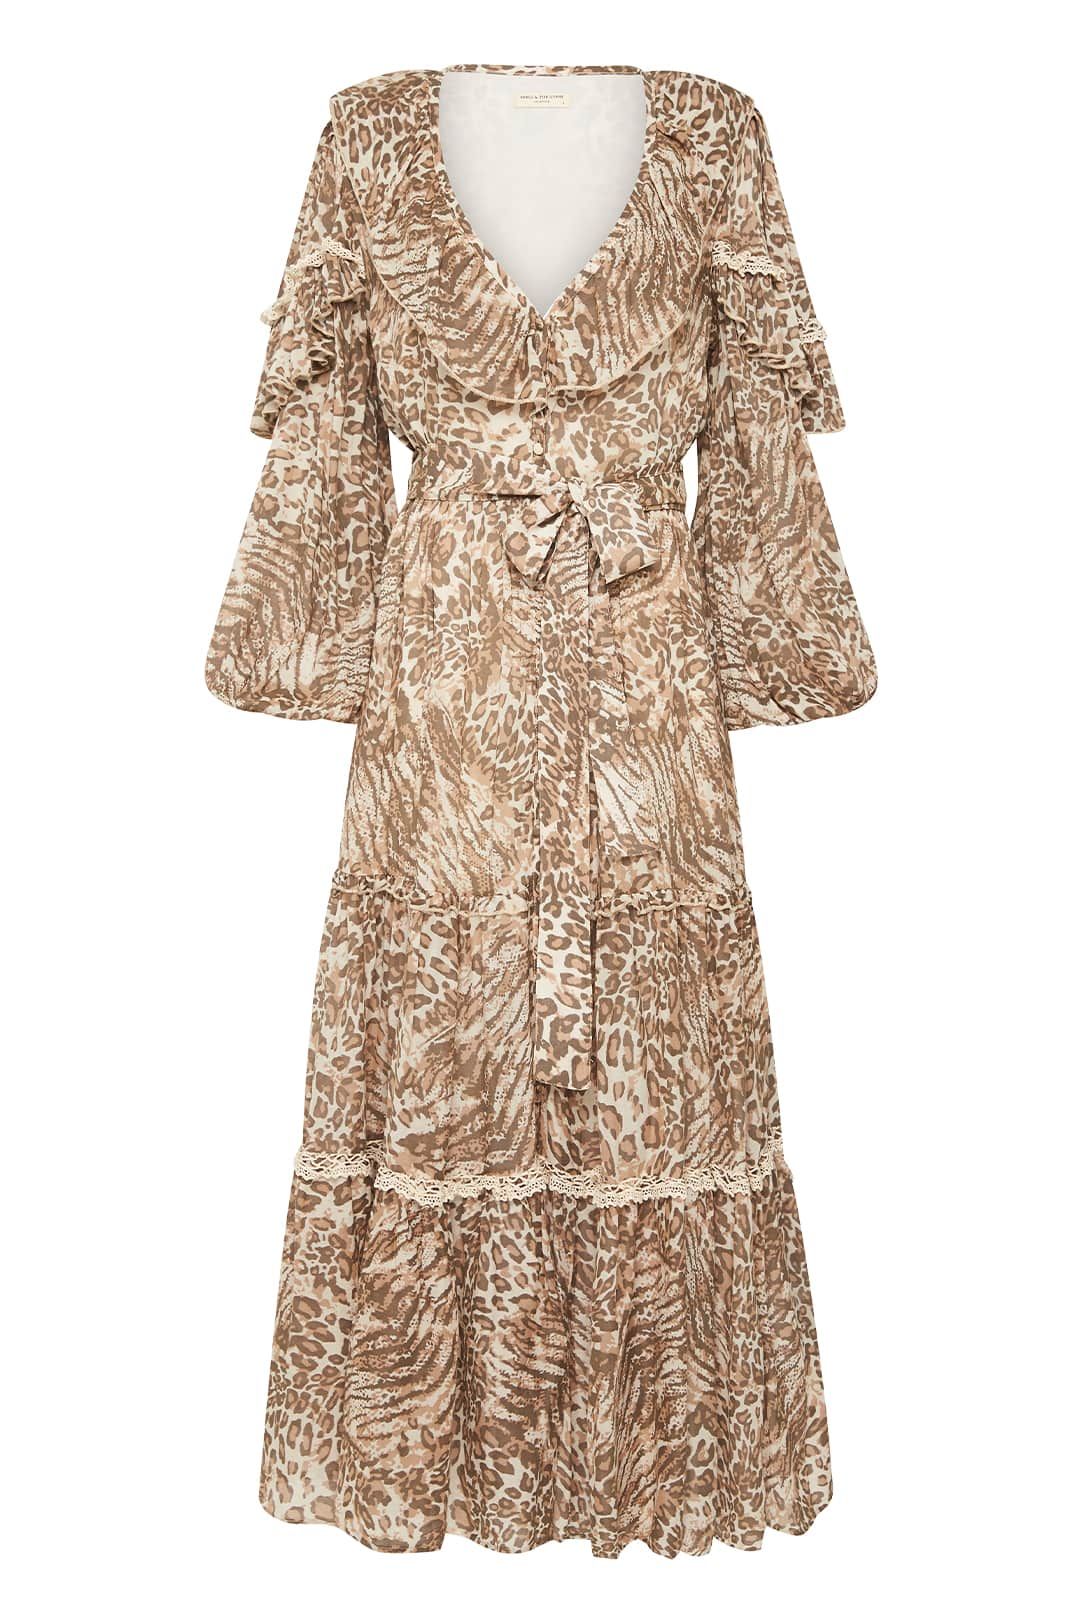 Spell Ada Gown Leopard Maxi Dress Ruffles